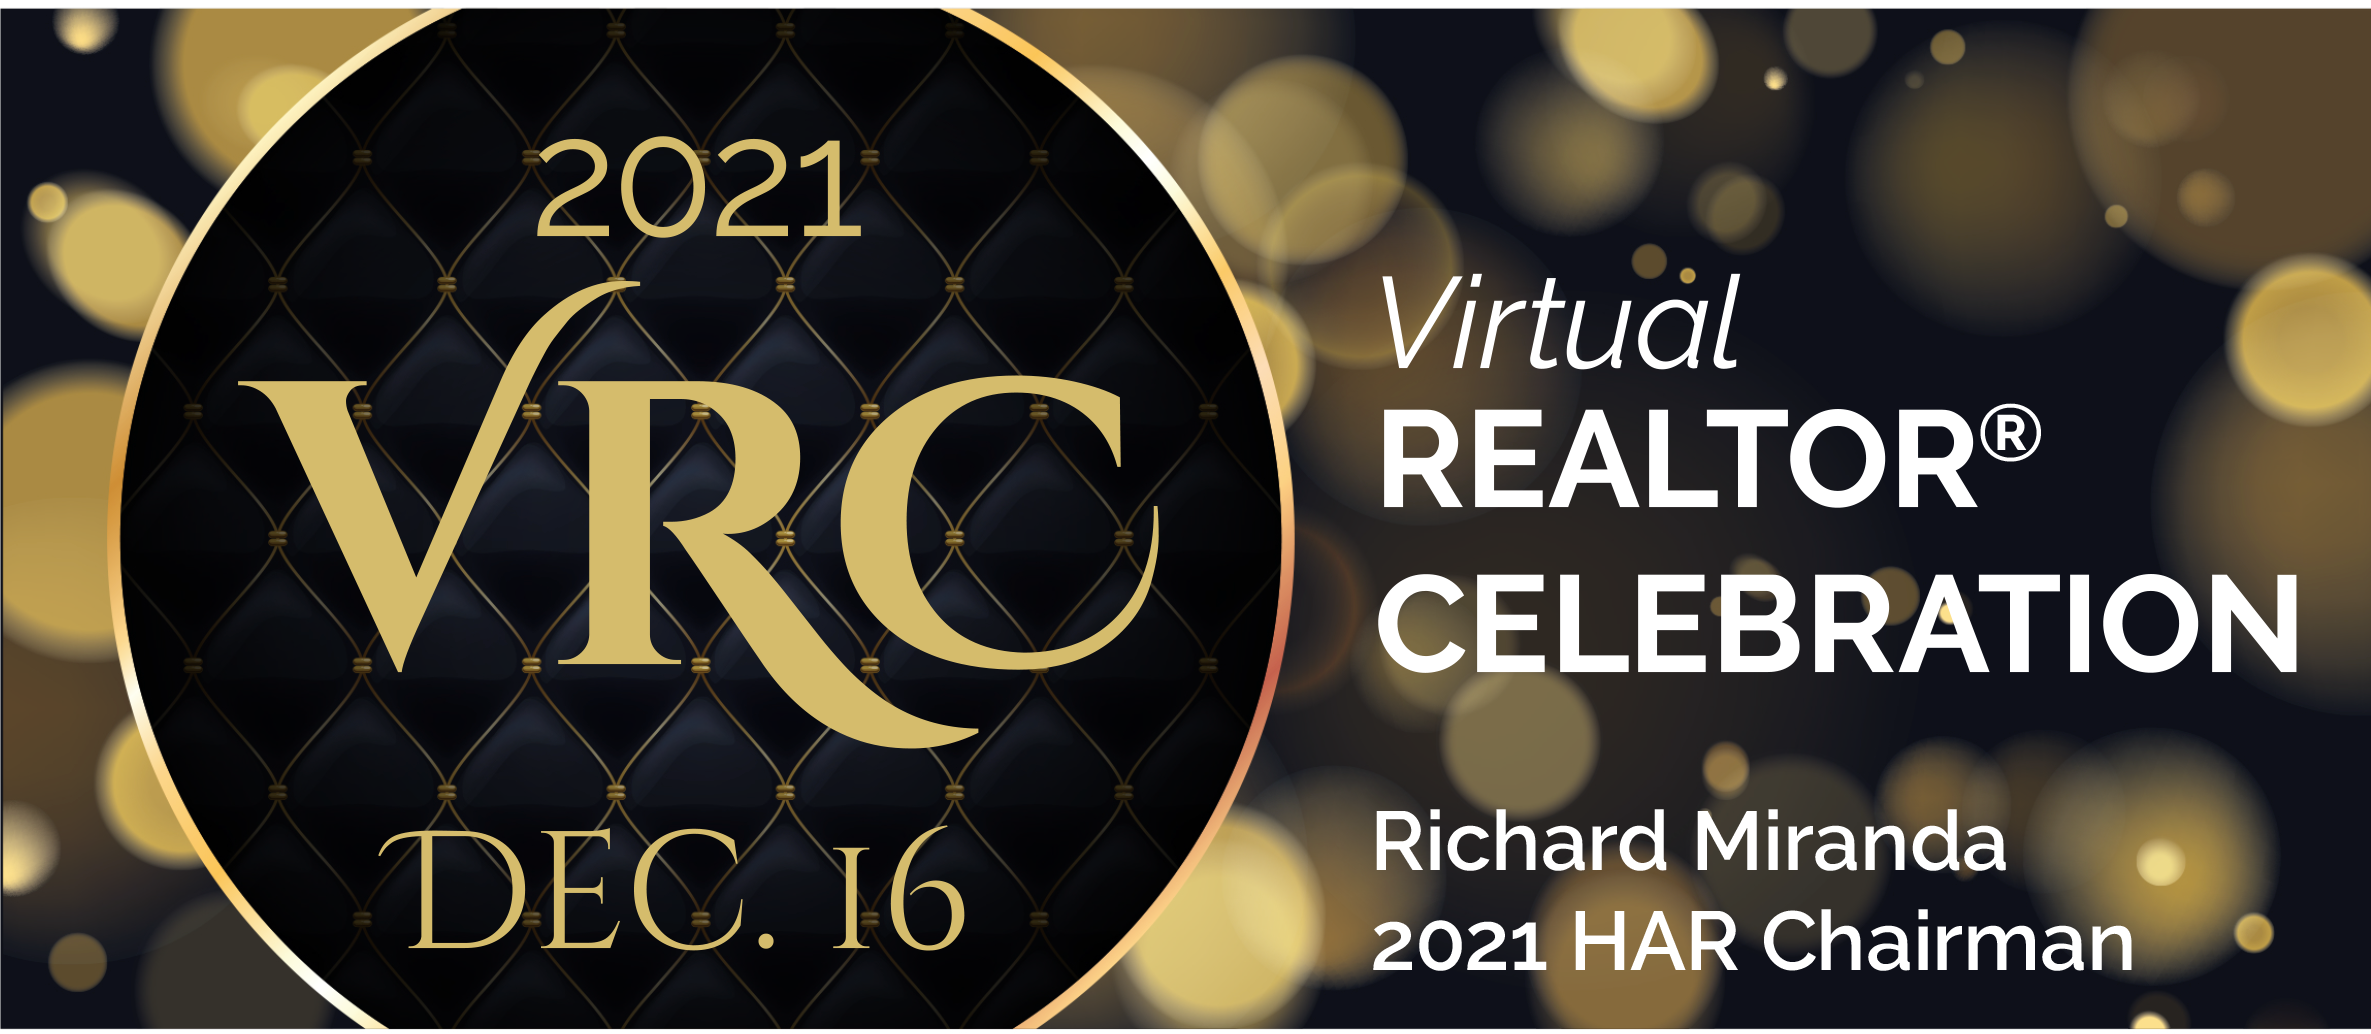 Virtual REALTOR® Celebration 2021